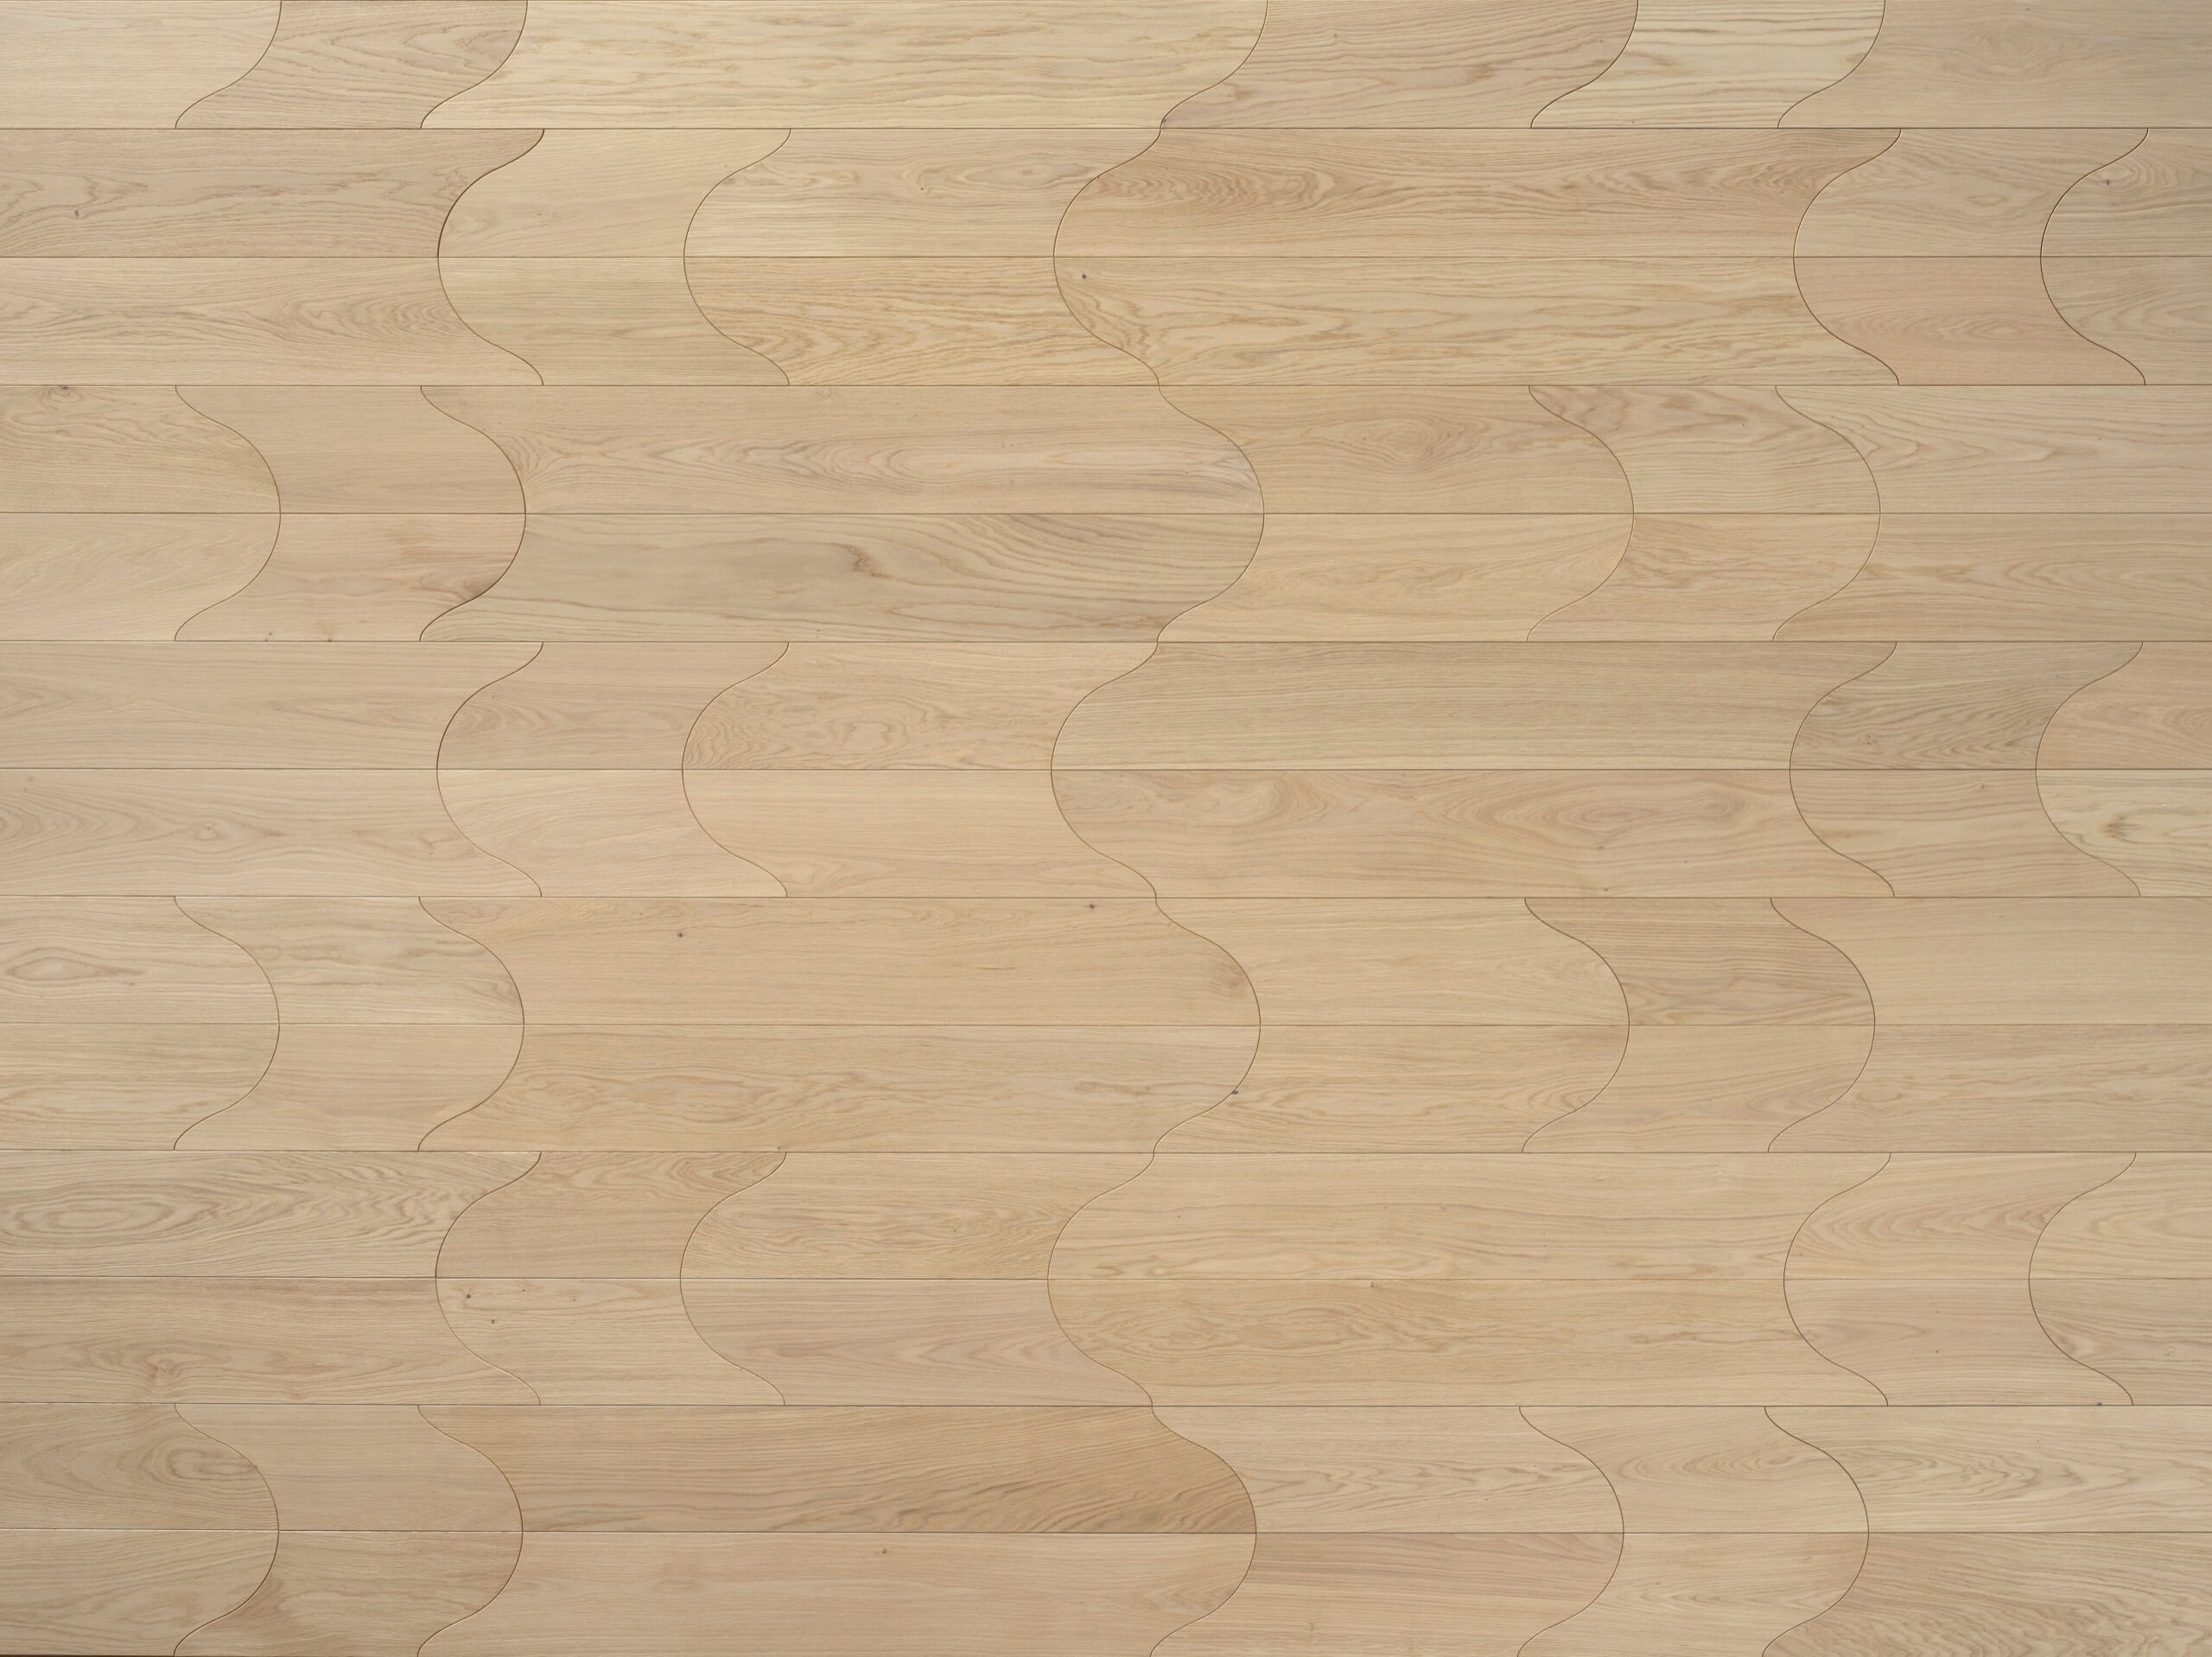 Unda modular floor in Walnut or Oak wood.